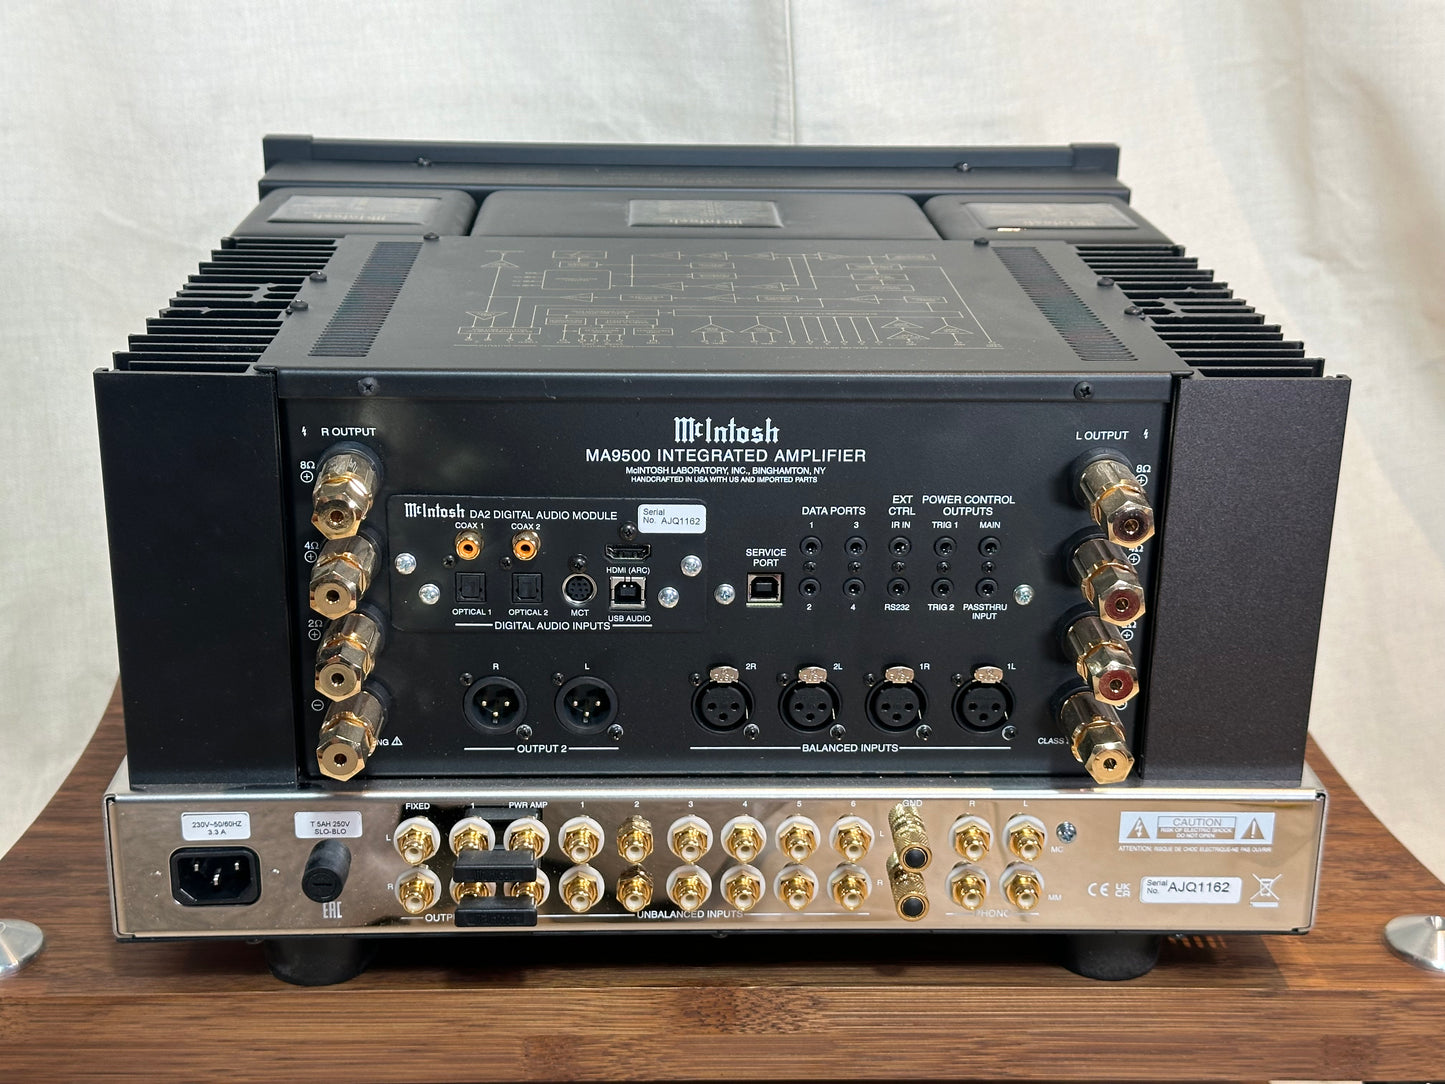 McIntosh MA9500 Integrated Amplifier - Customer Trade In